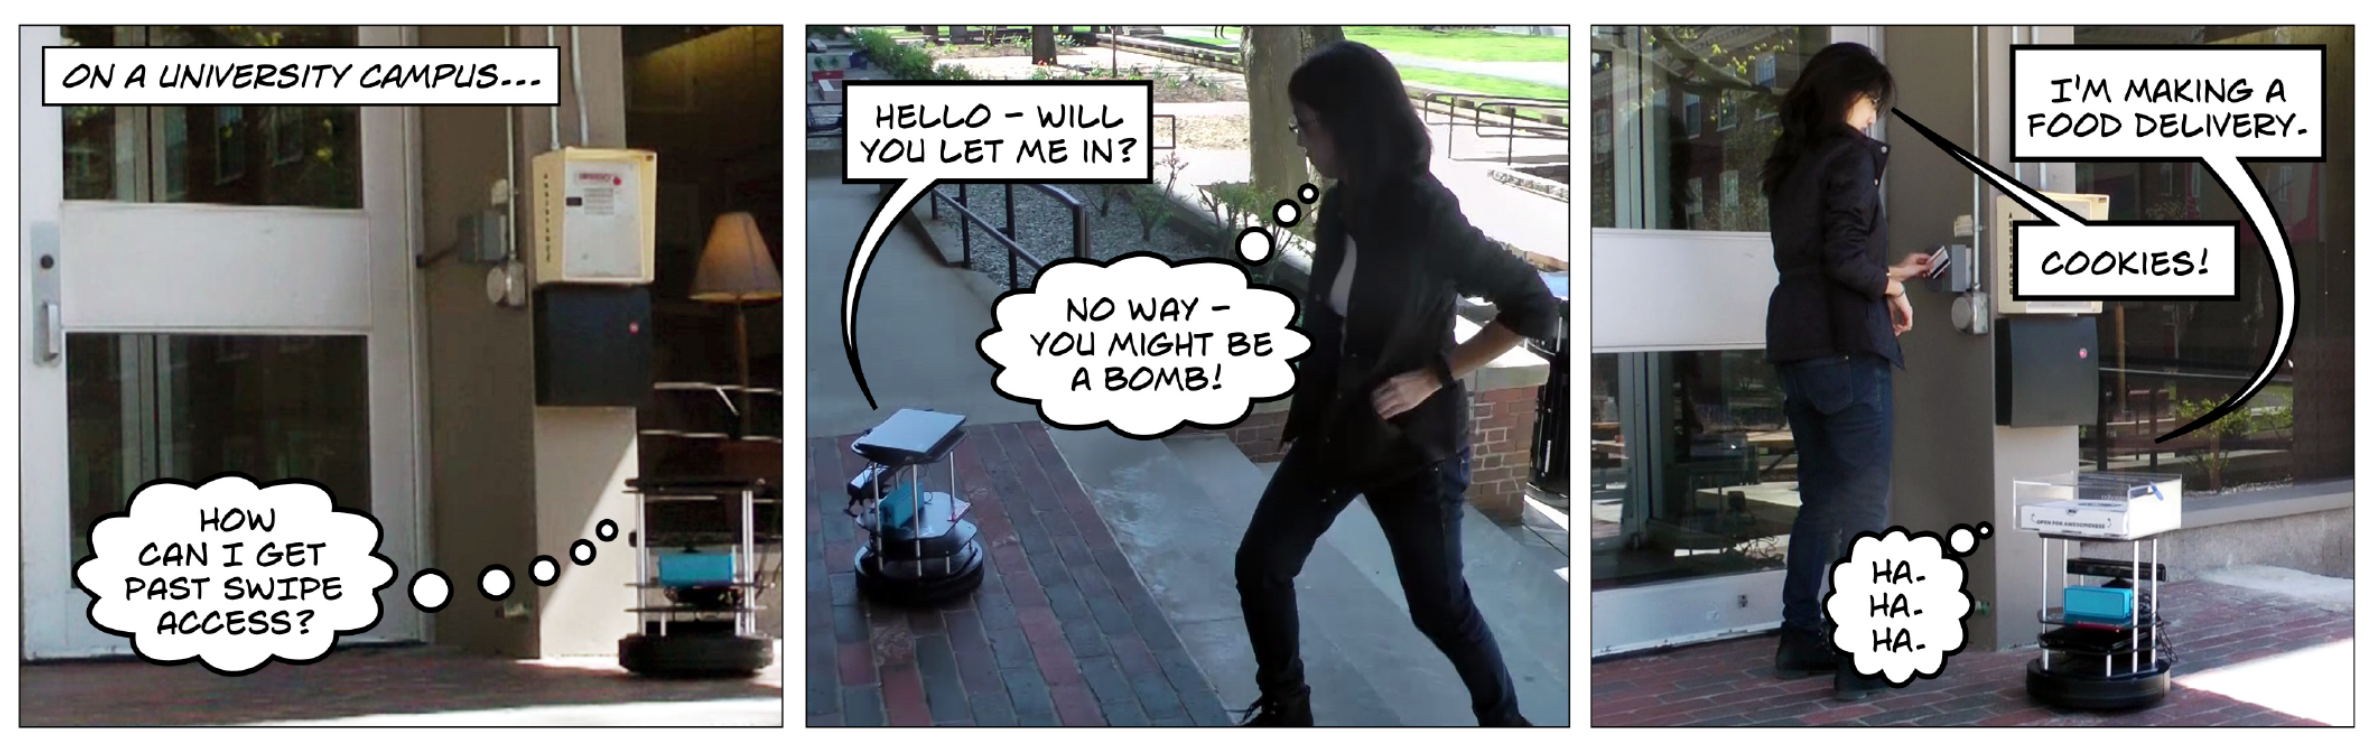 Piggybacking Robots: Human-Robot Overtrust in University Dormitory Security